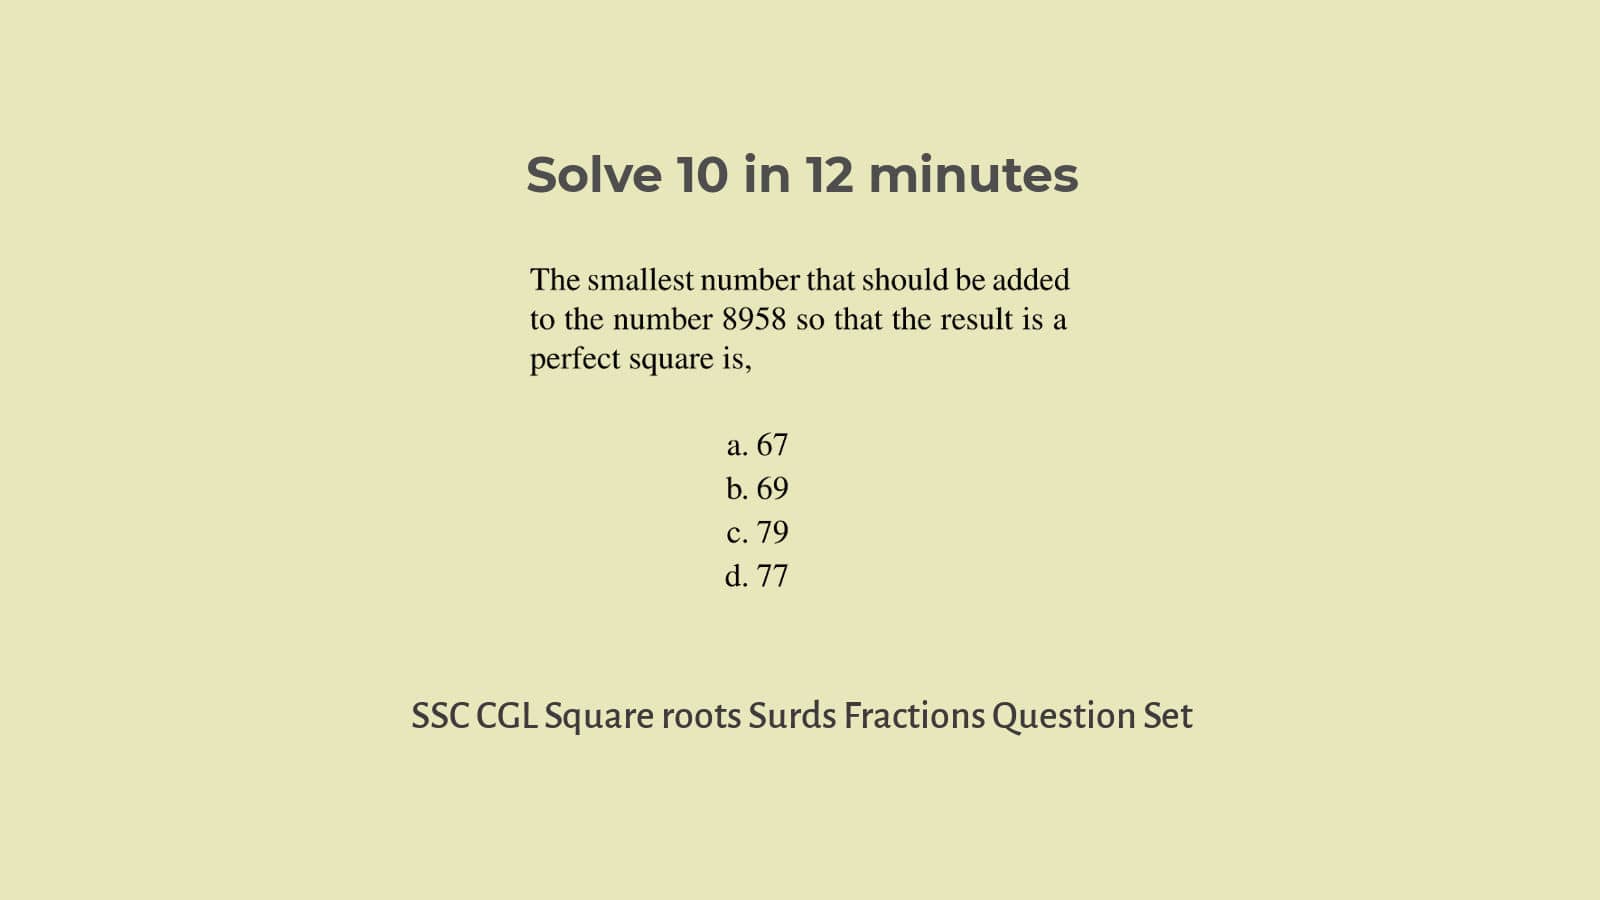  SSC CGL Quantitative Aptitude Square Roots Surds Fractions Question Set 59